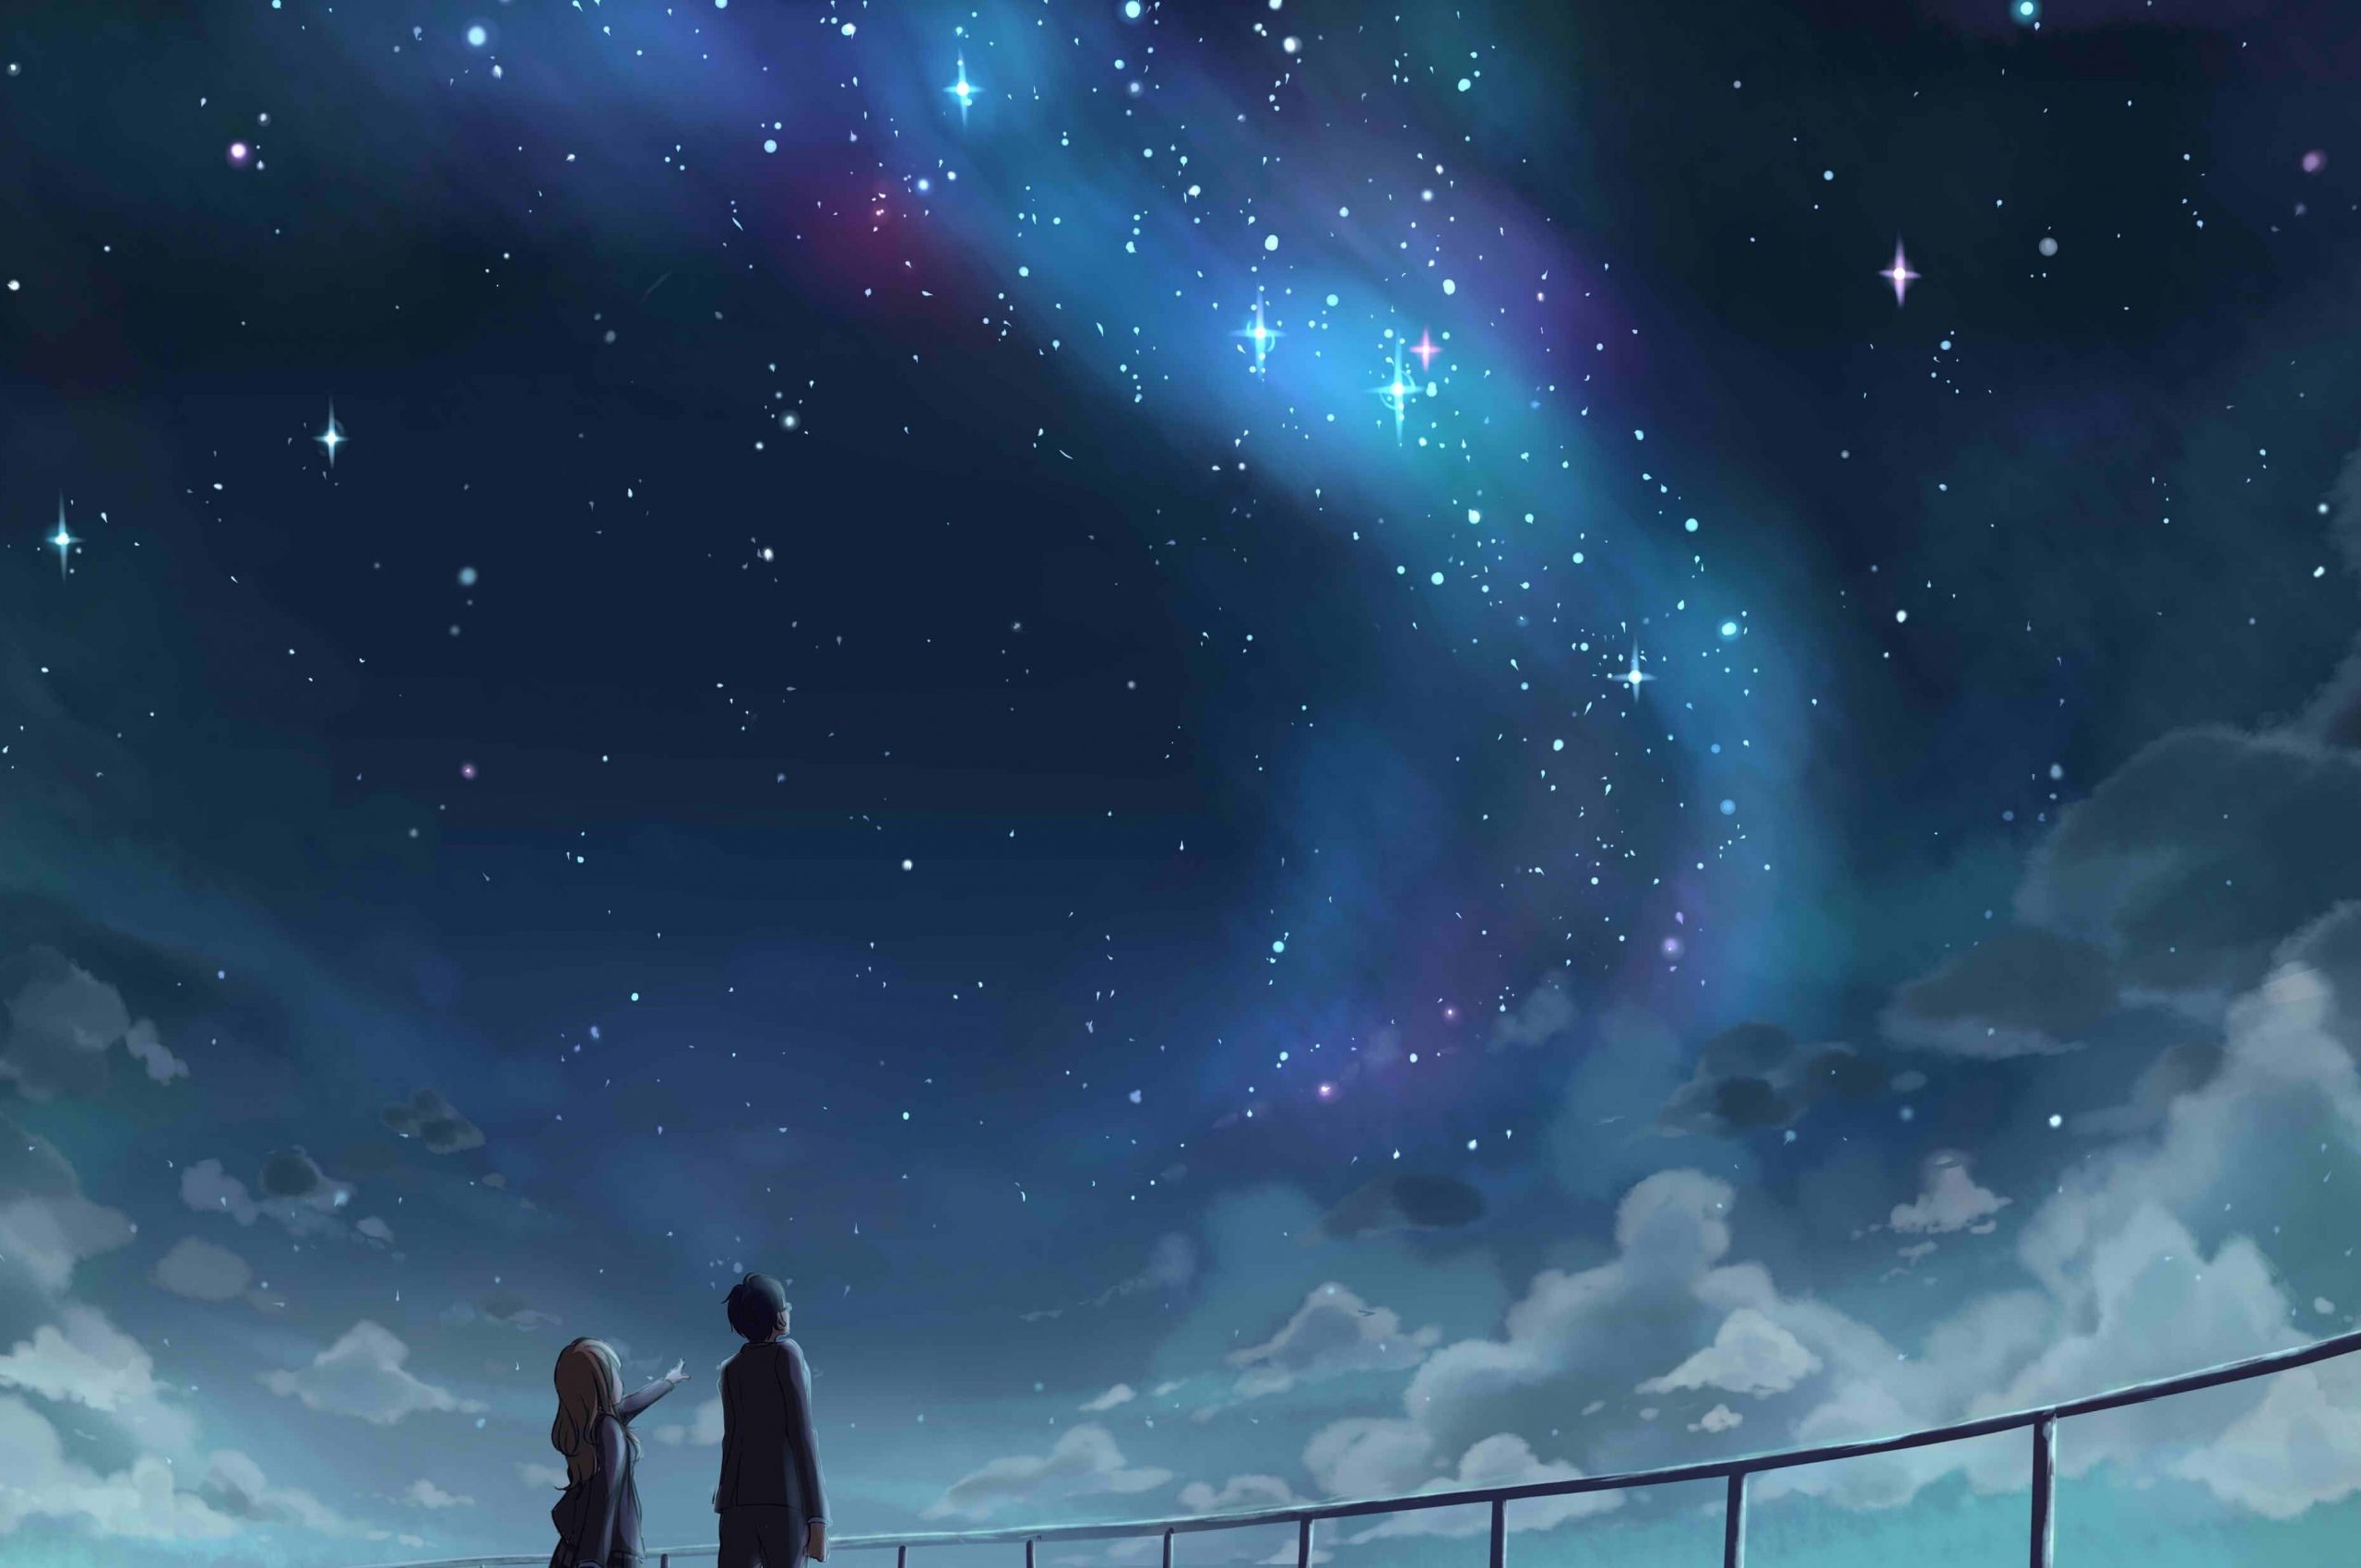 HD wallpaper sky anime beautiful girl nature atmosphere darkness  night  Wallpaper Flare